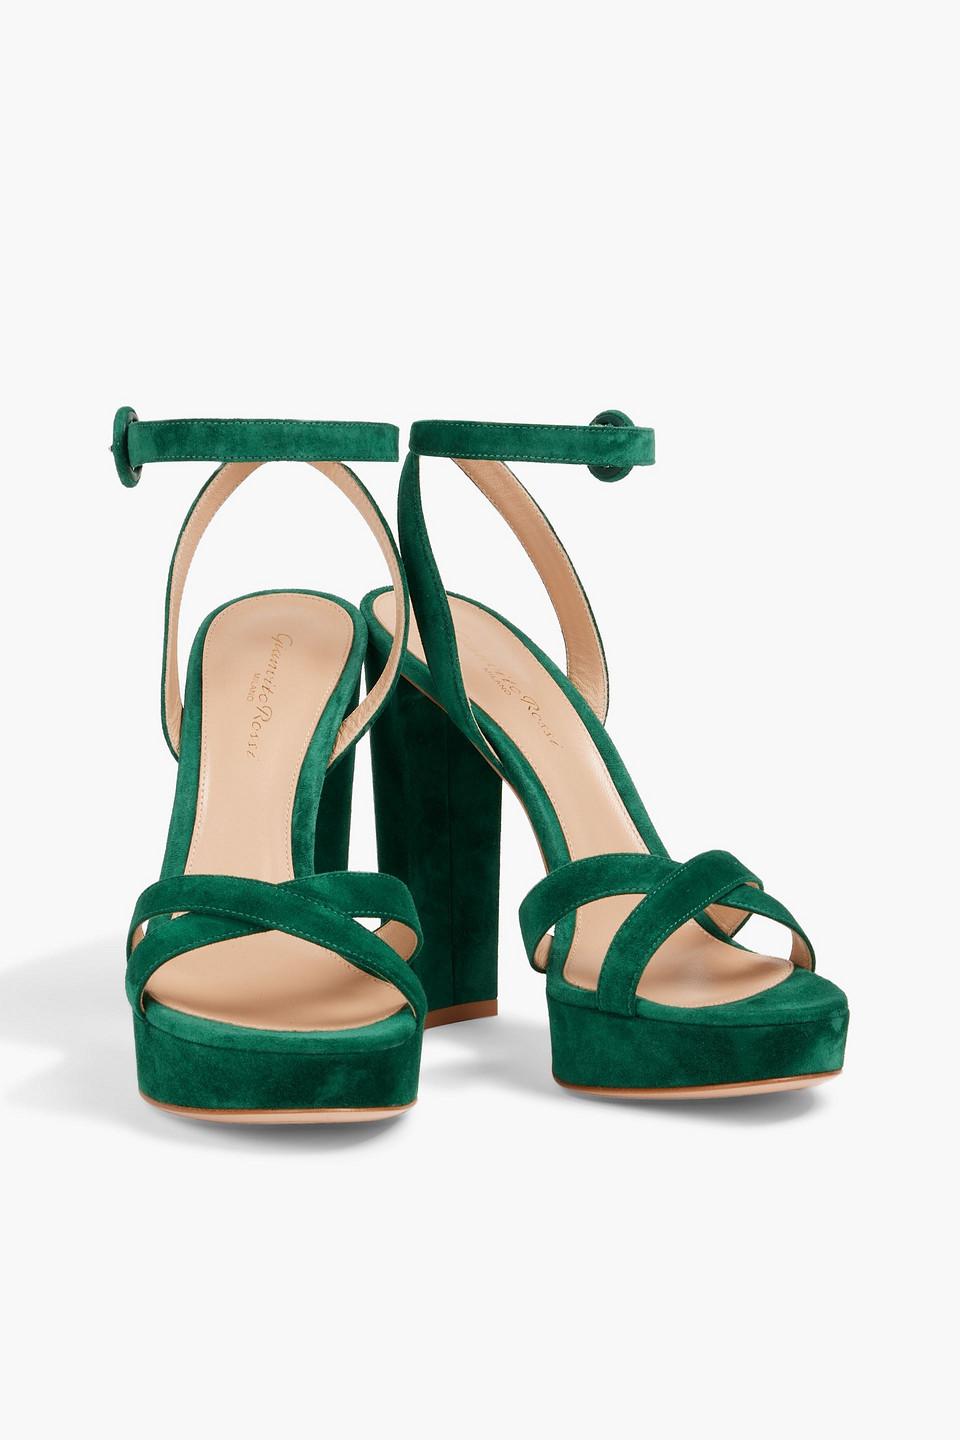 Gianvito Rossi Poppy Suede Platform Sandals in Green | Lyst